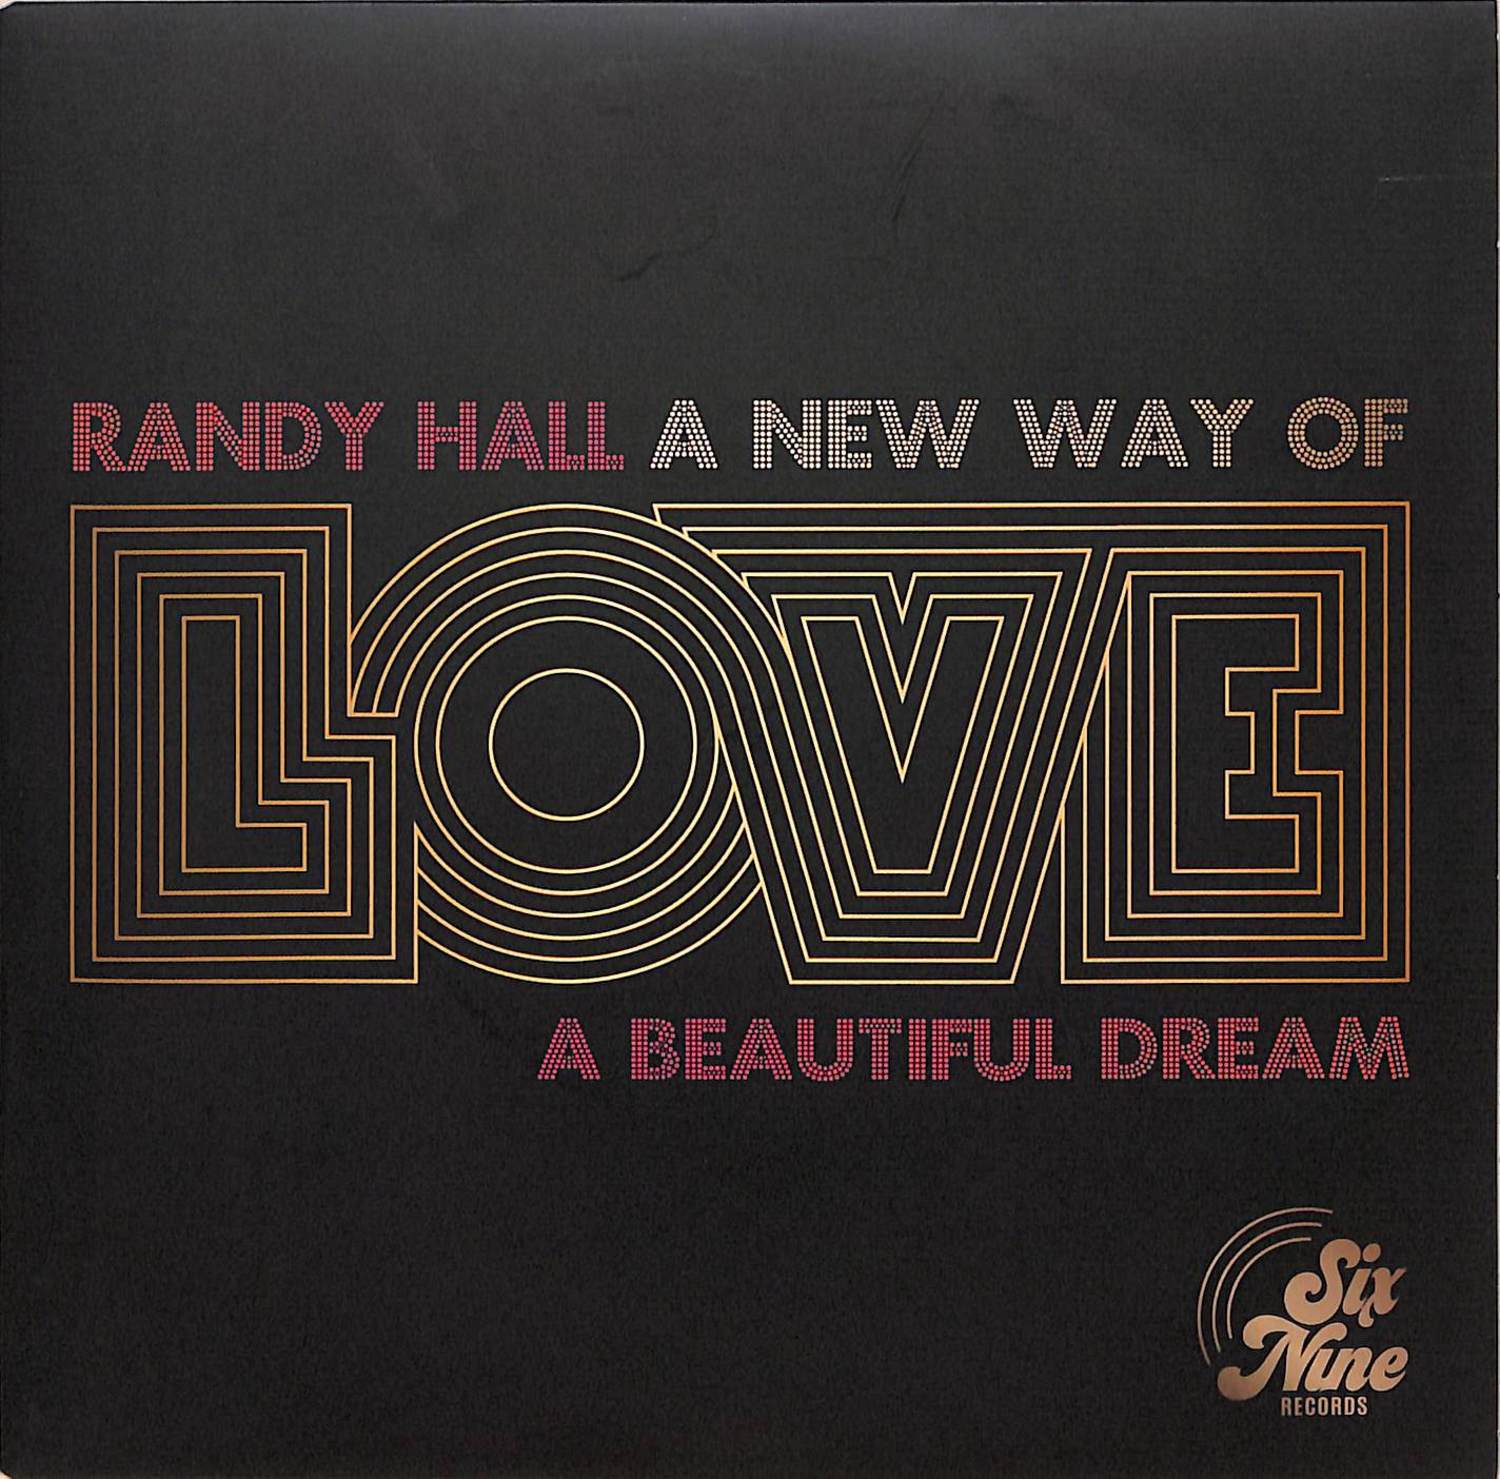 Randy Hall - A NEW WAY OF LOVE 